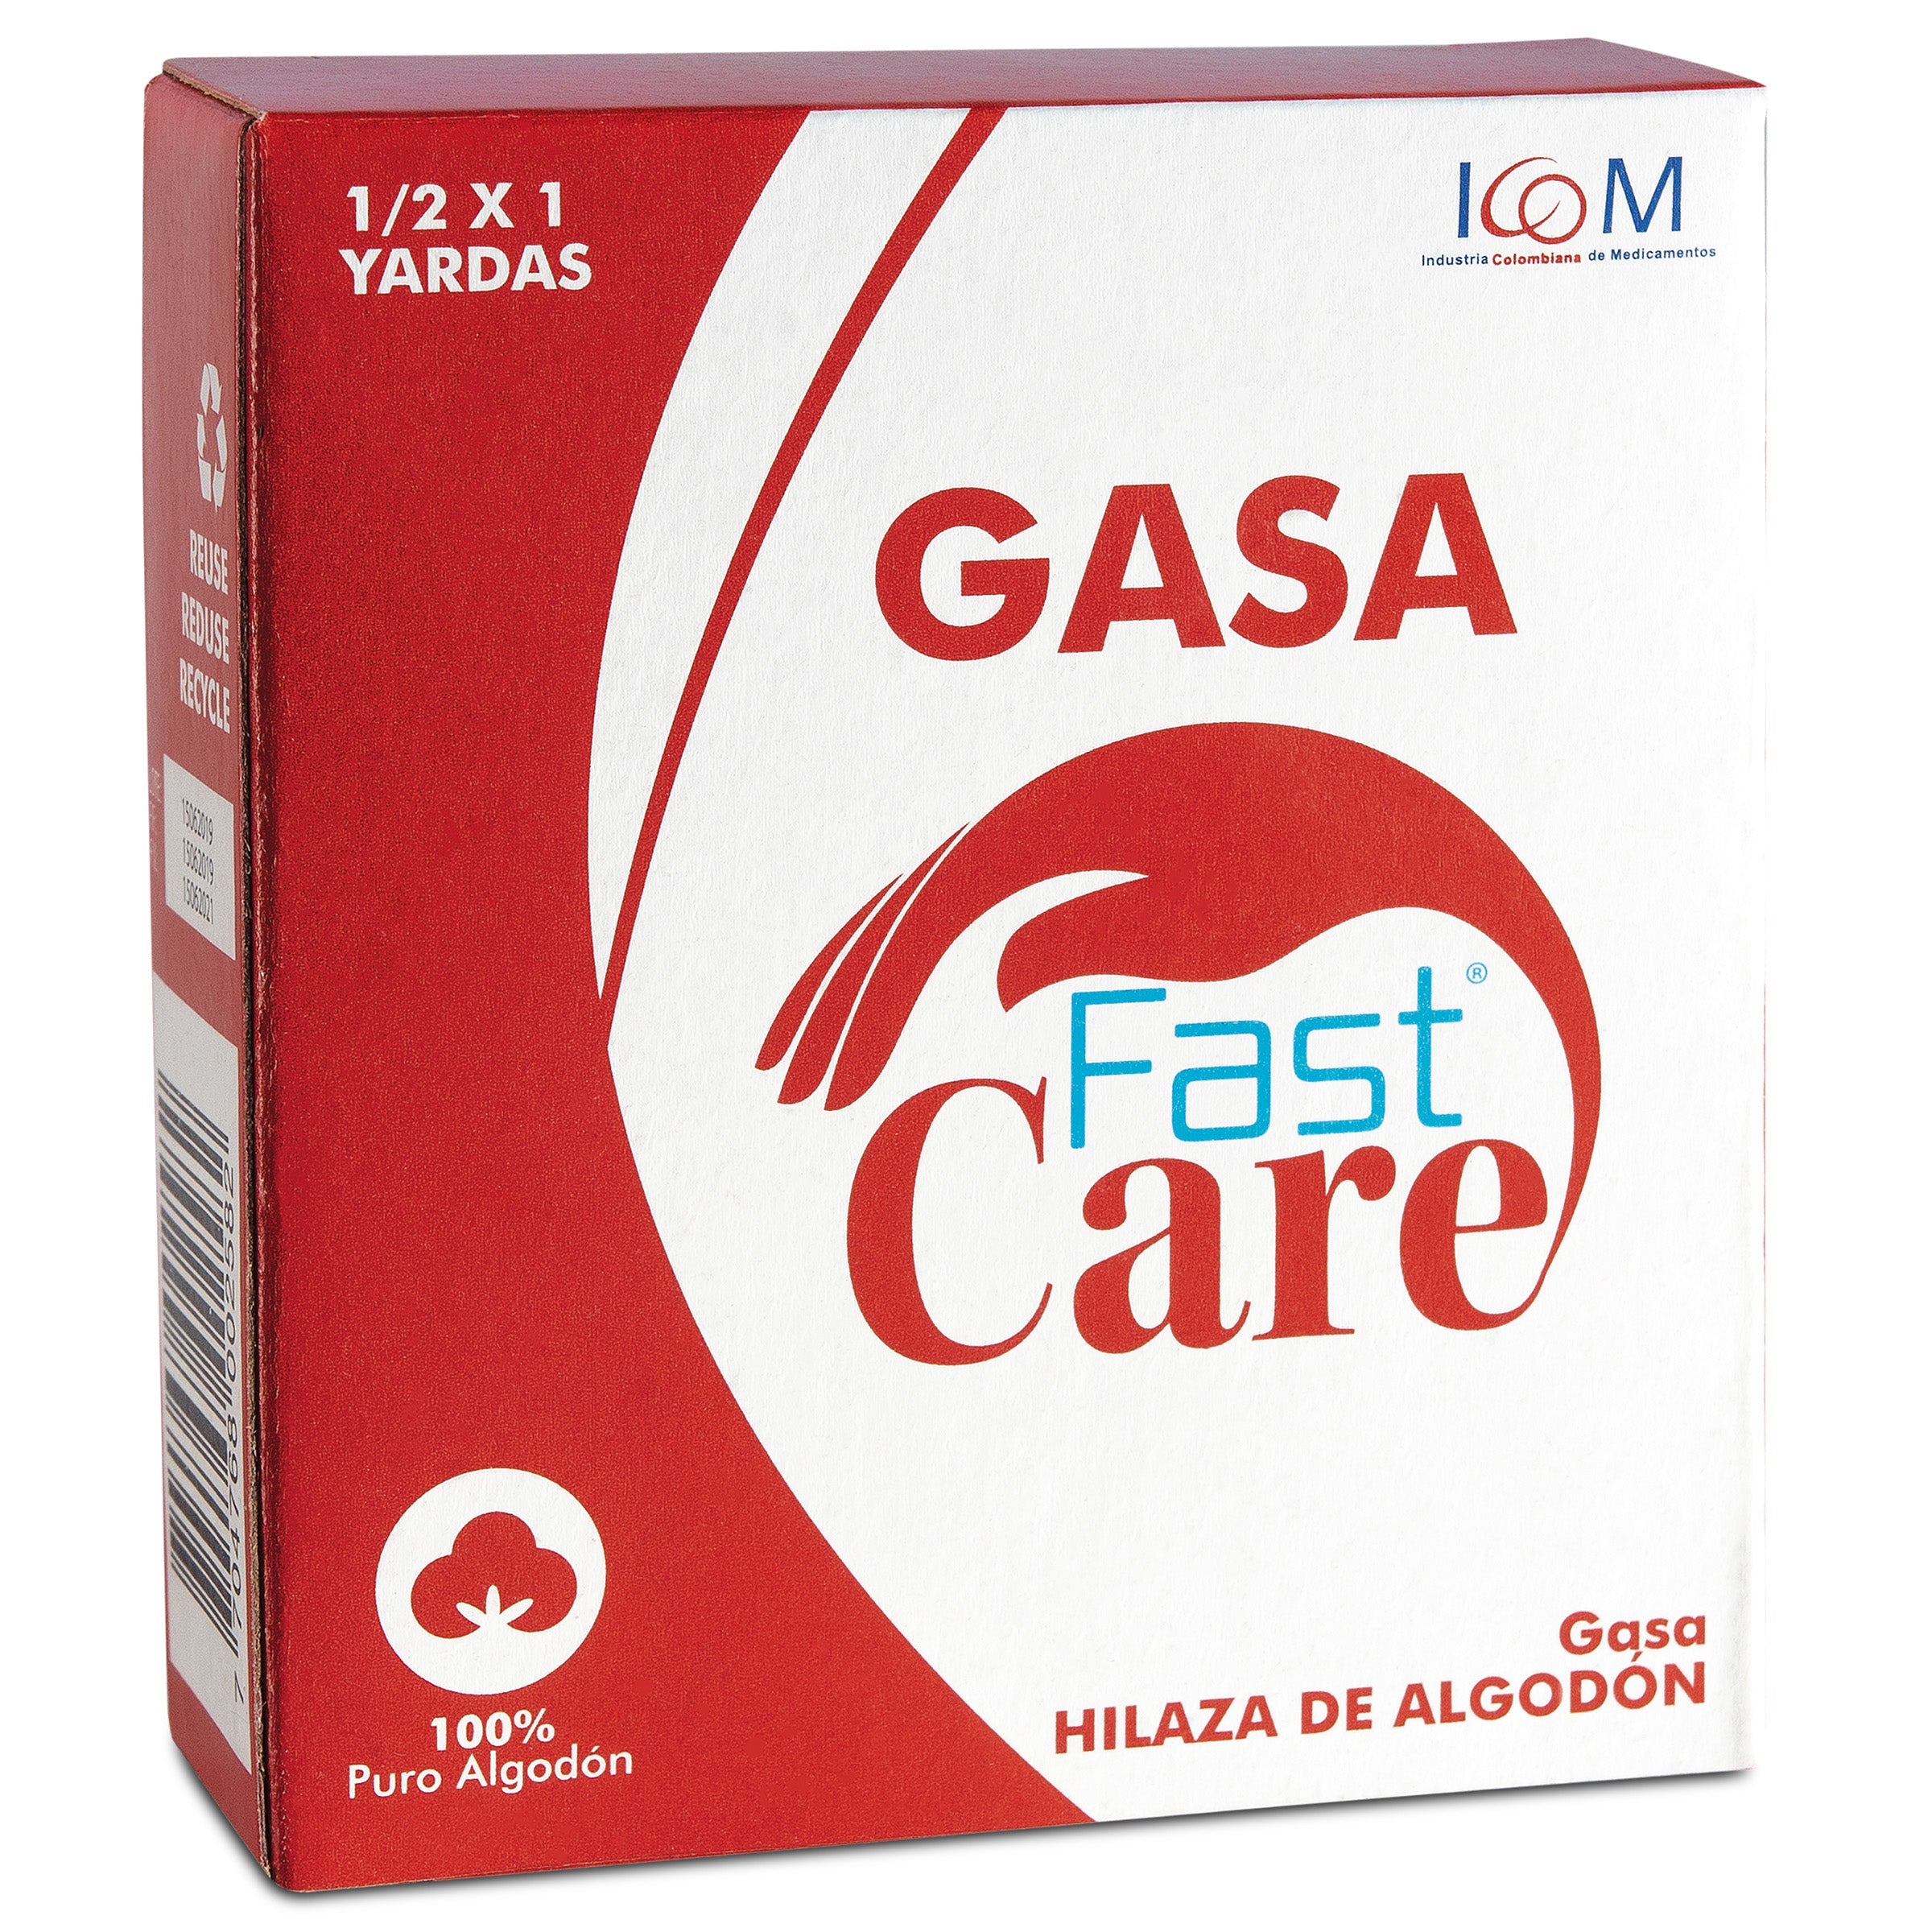 GASA FAST CARE ASEPTICA 1_2X1 ICOM